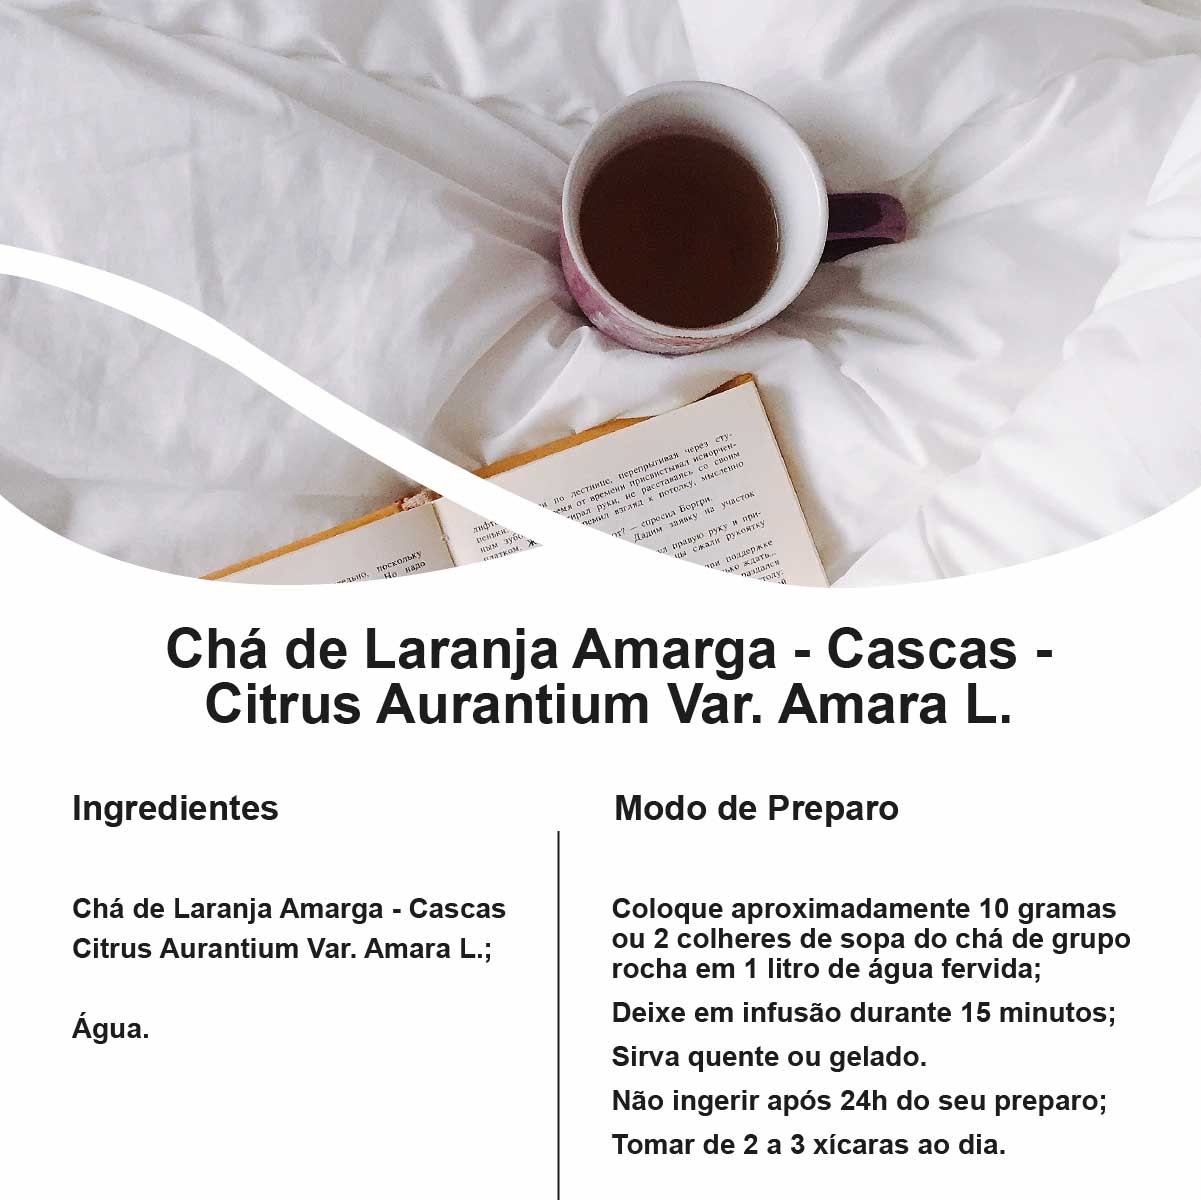 Chá de Laranja Amarga - Cascas - Citrus Aurantium Var. Amara L. - 100g